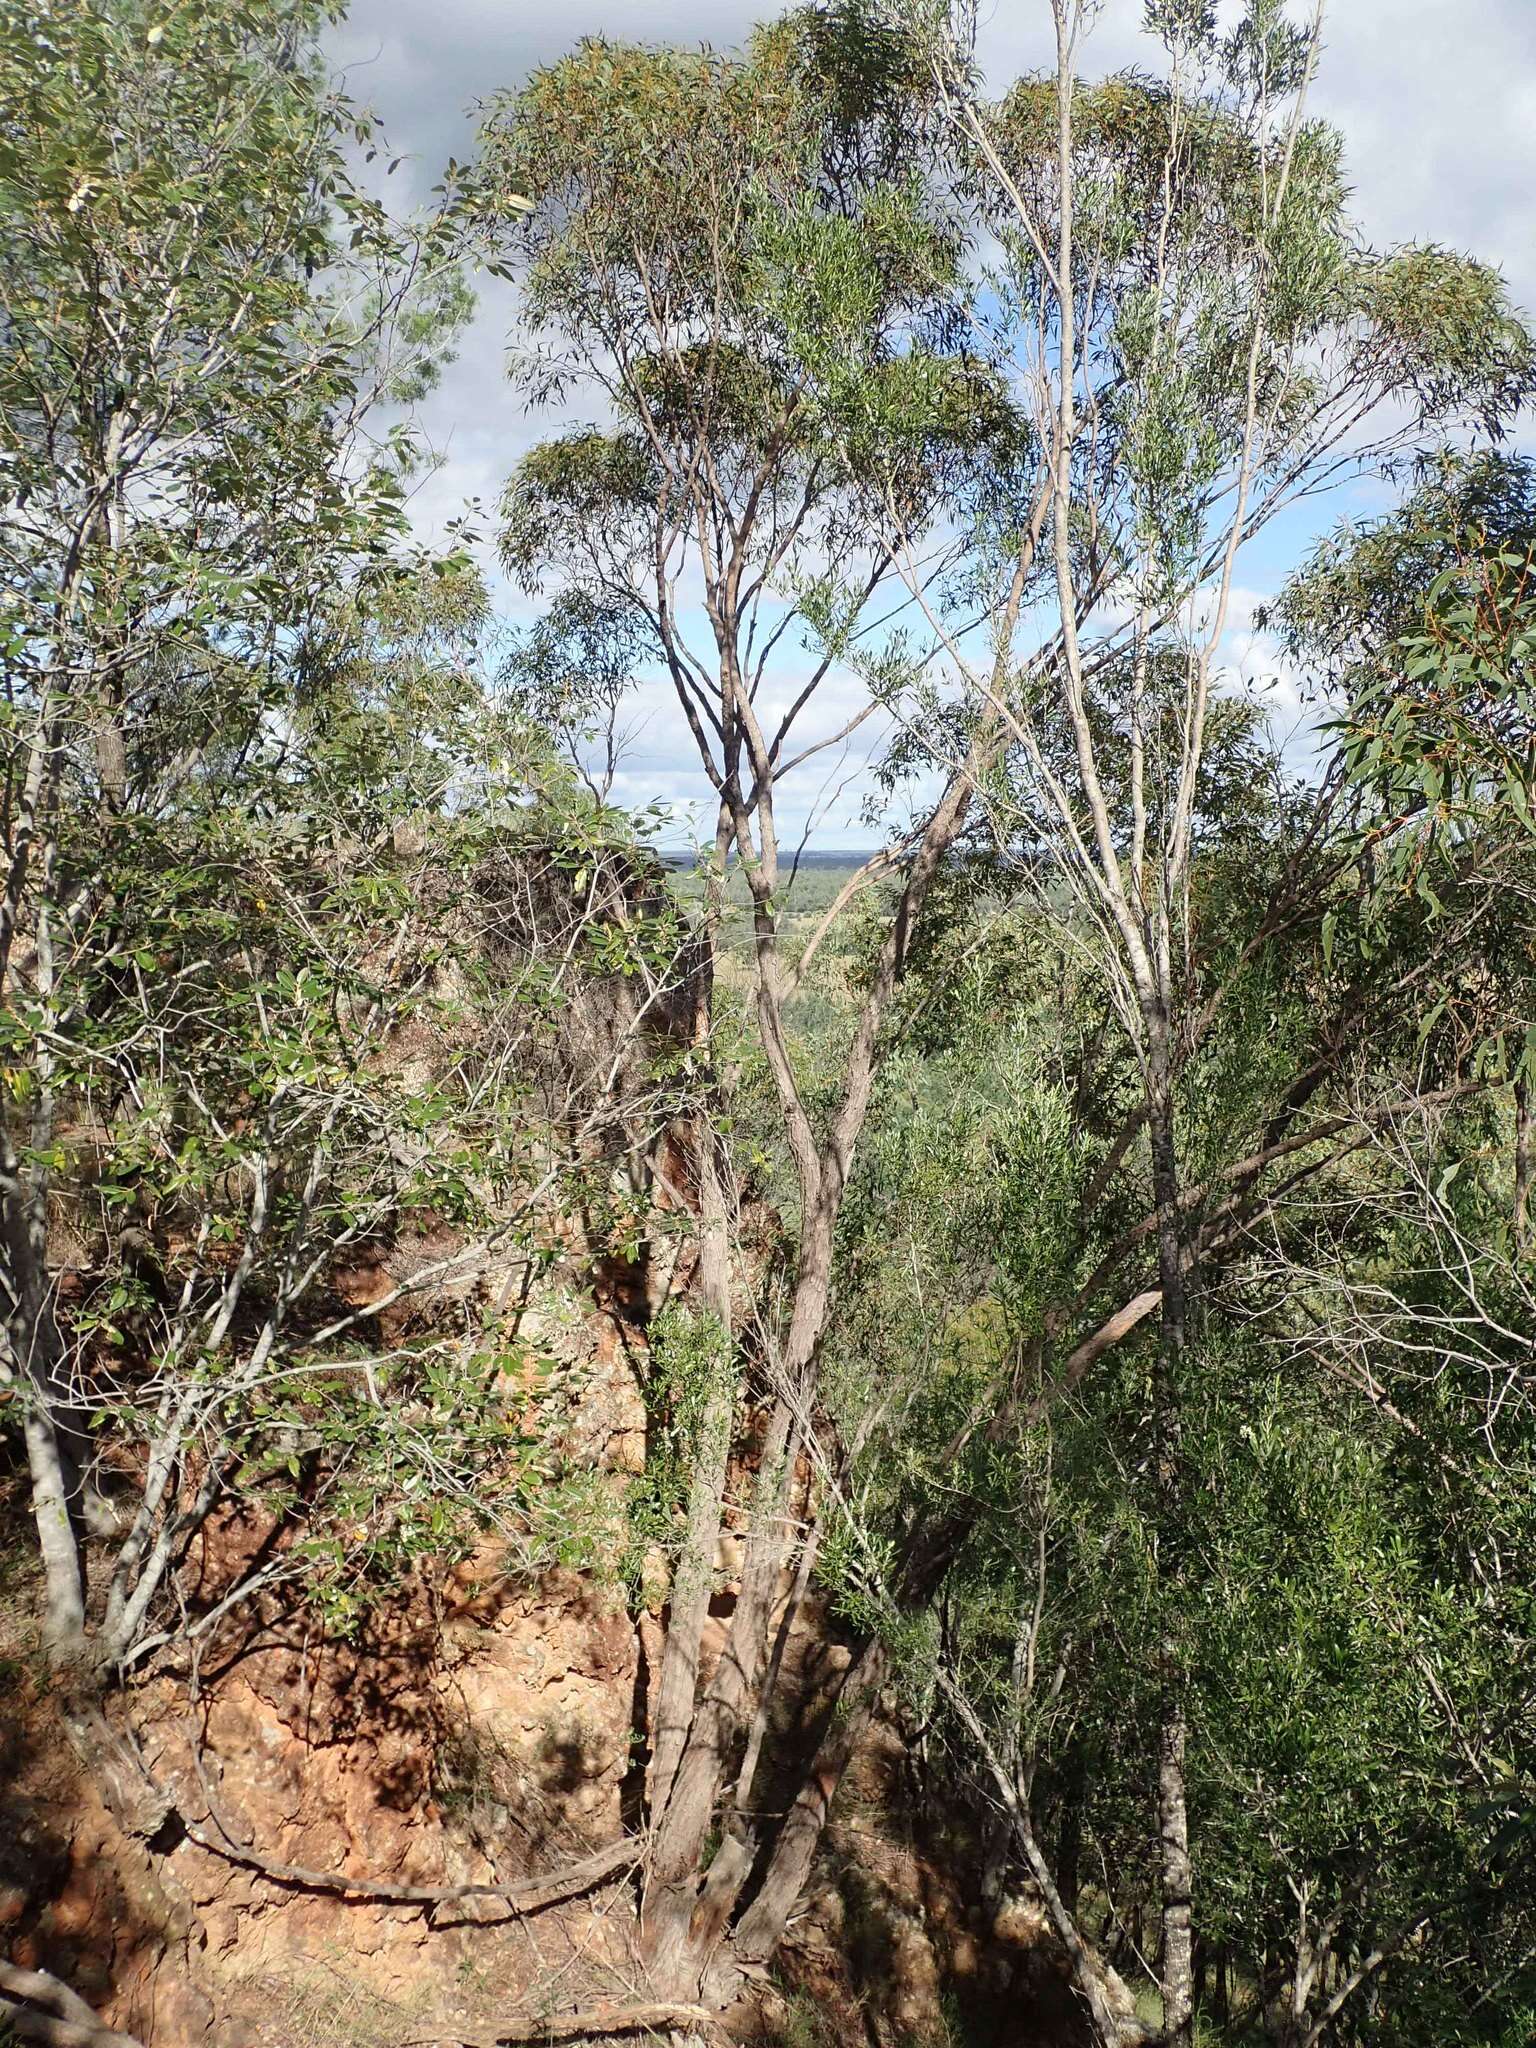 Image of Eucalyptus apothalassica L. A. S. Johnson & K. D. Hill